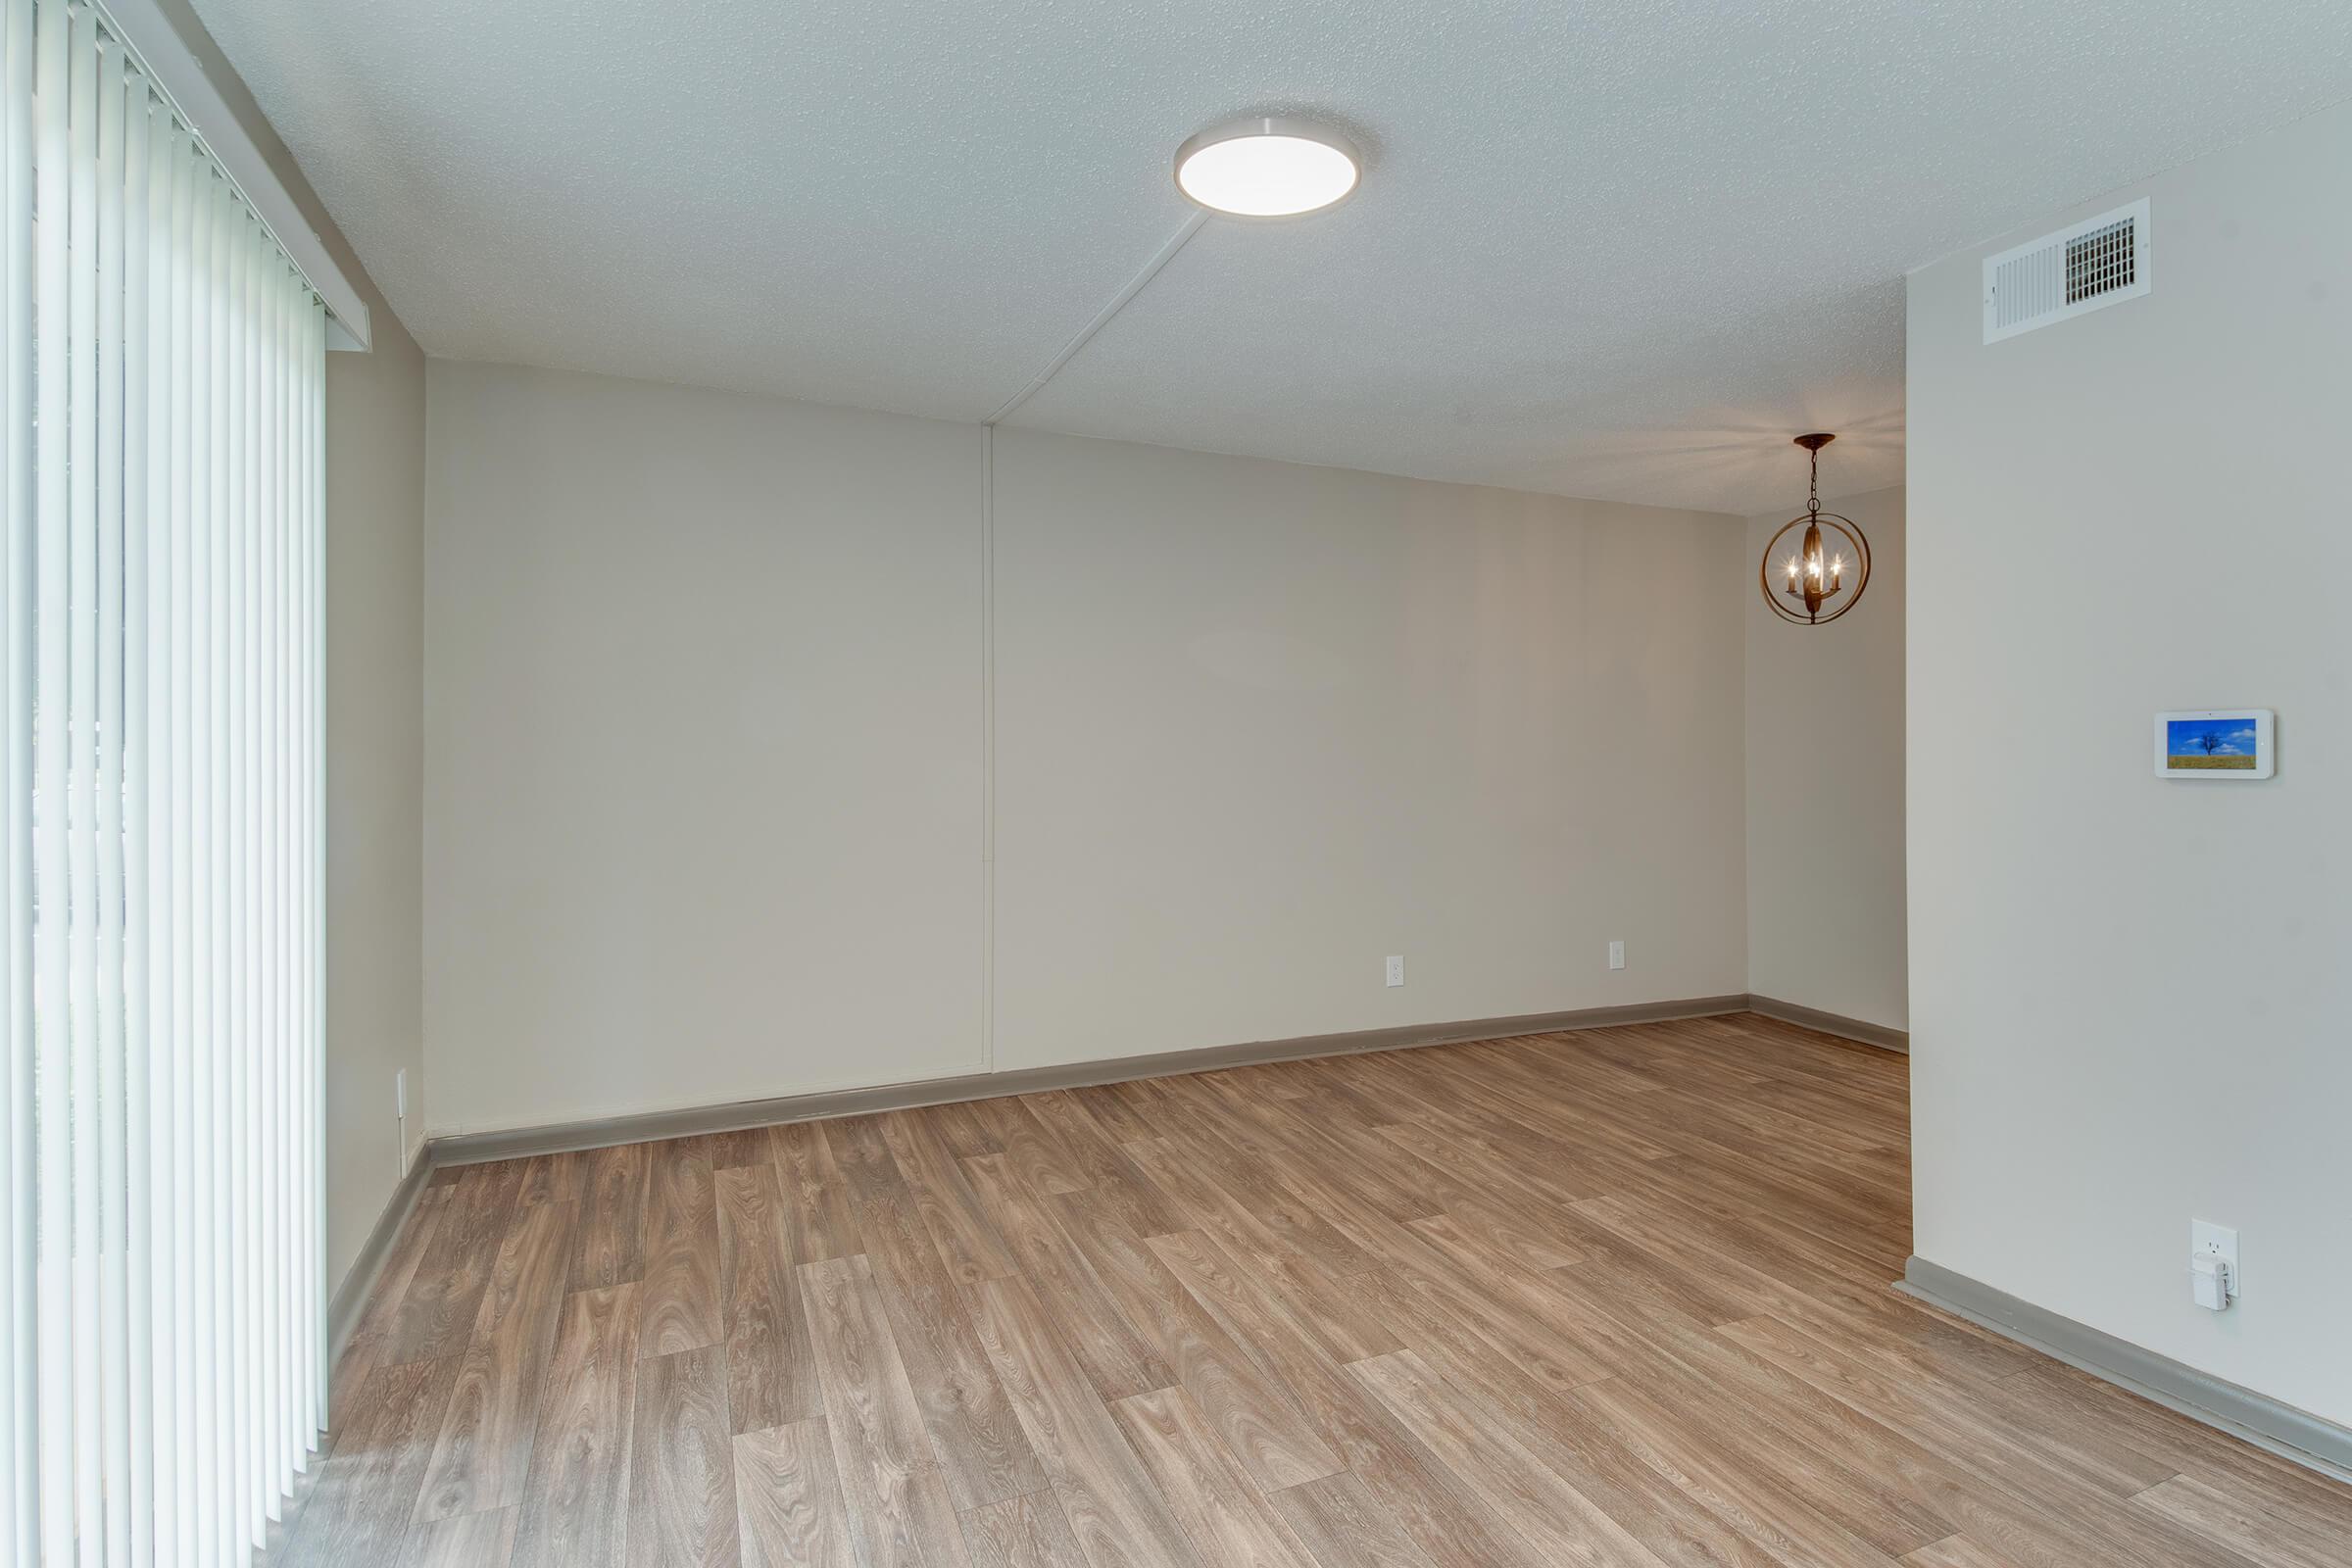 Open living area with hardwood floors